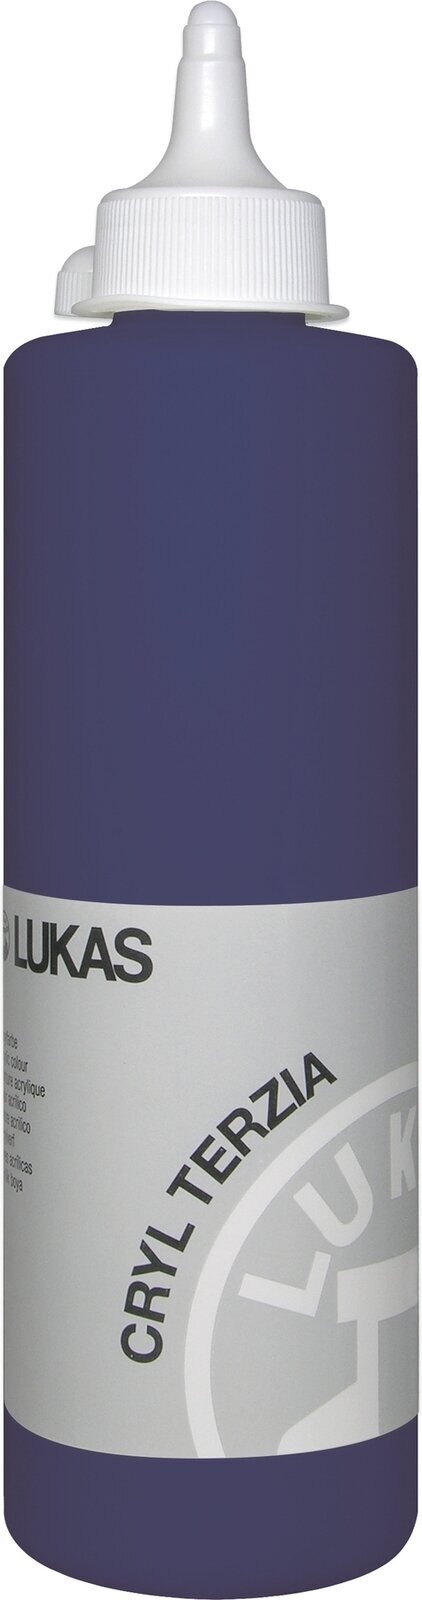 Acrylic Paint Lukas Cryl Terzia Acrylic Paint Plastic Bottle Acrylic Paint Prussian Blue 500 ml 1 pc